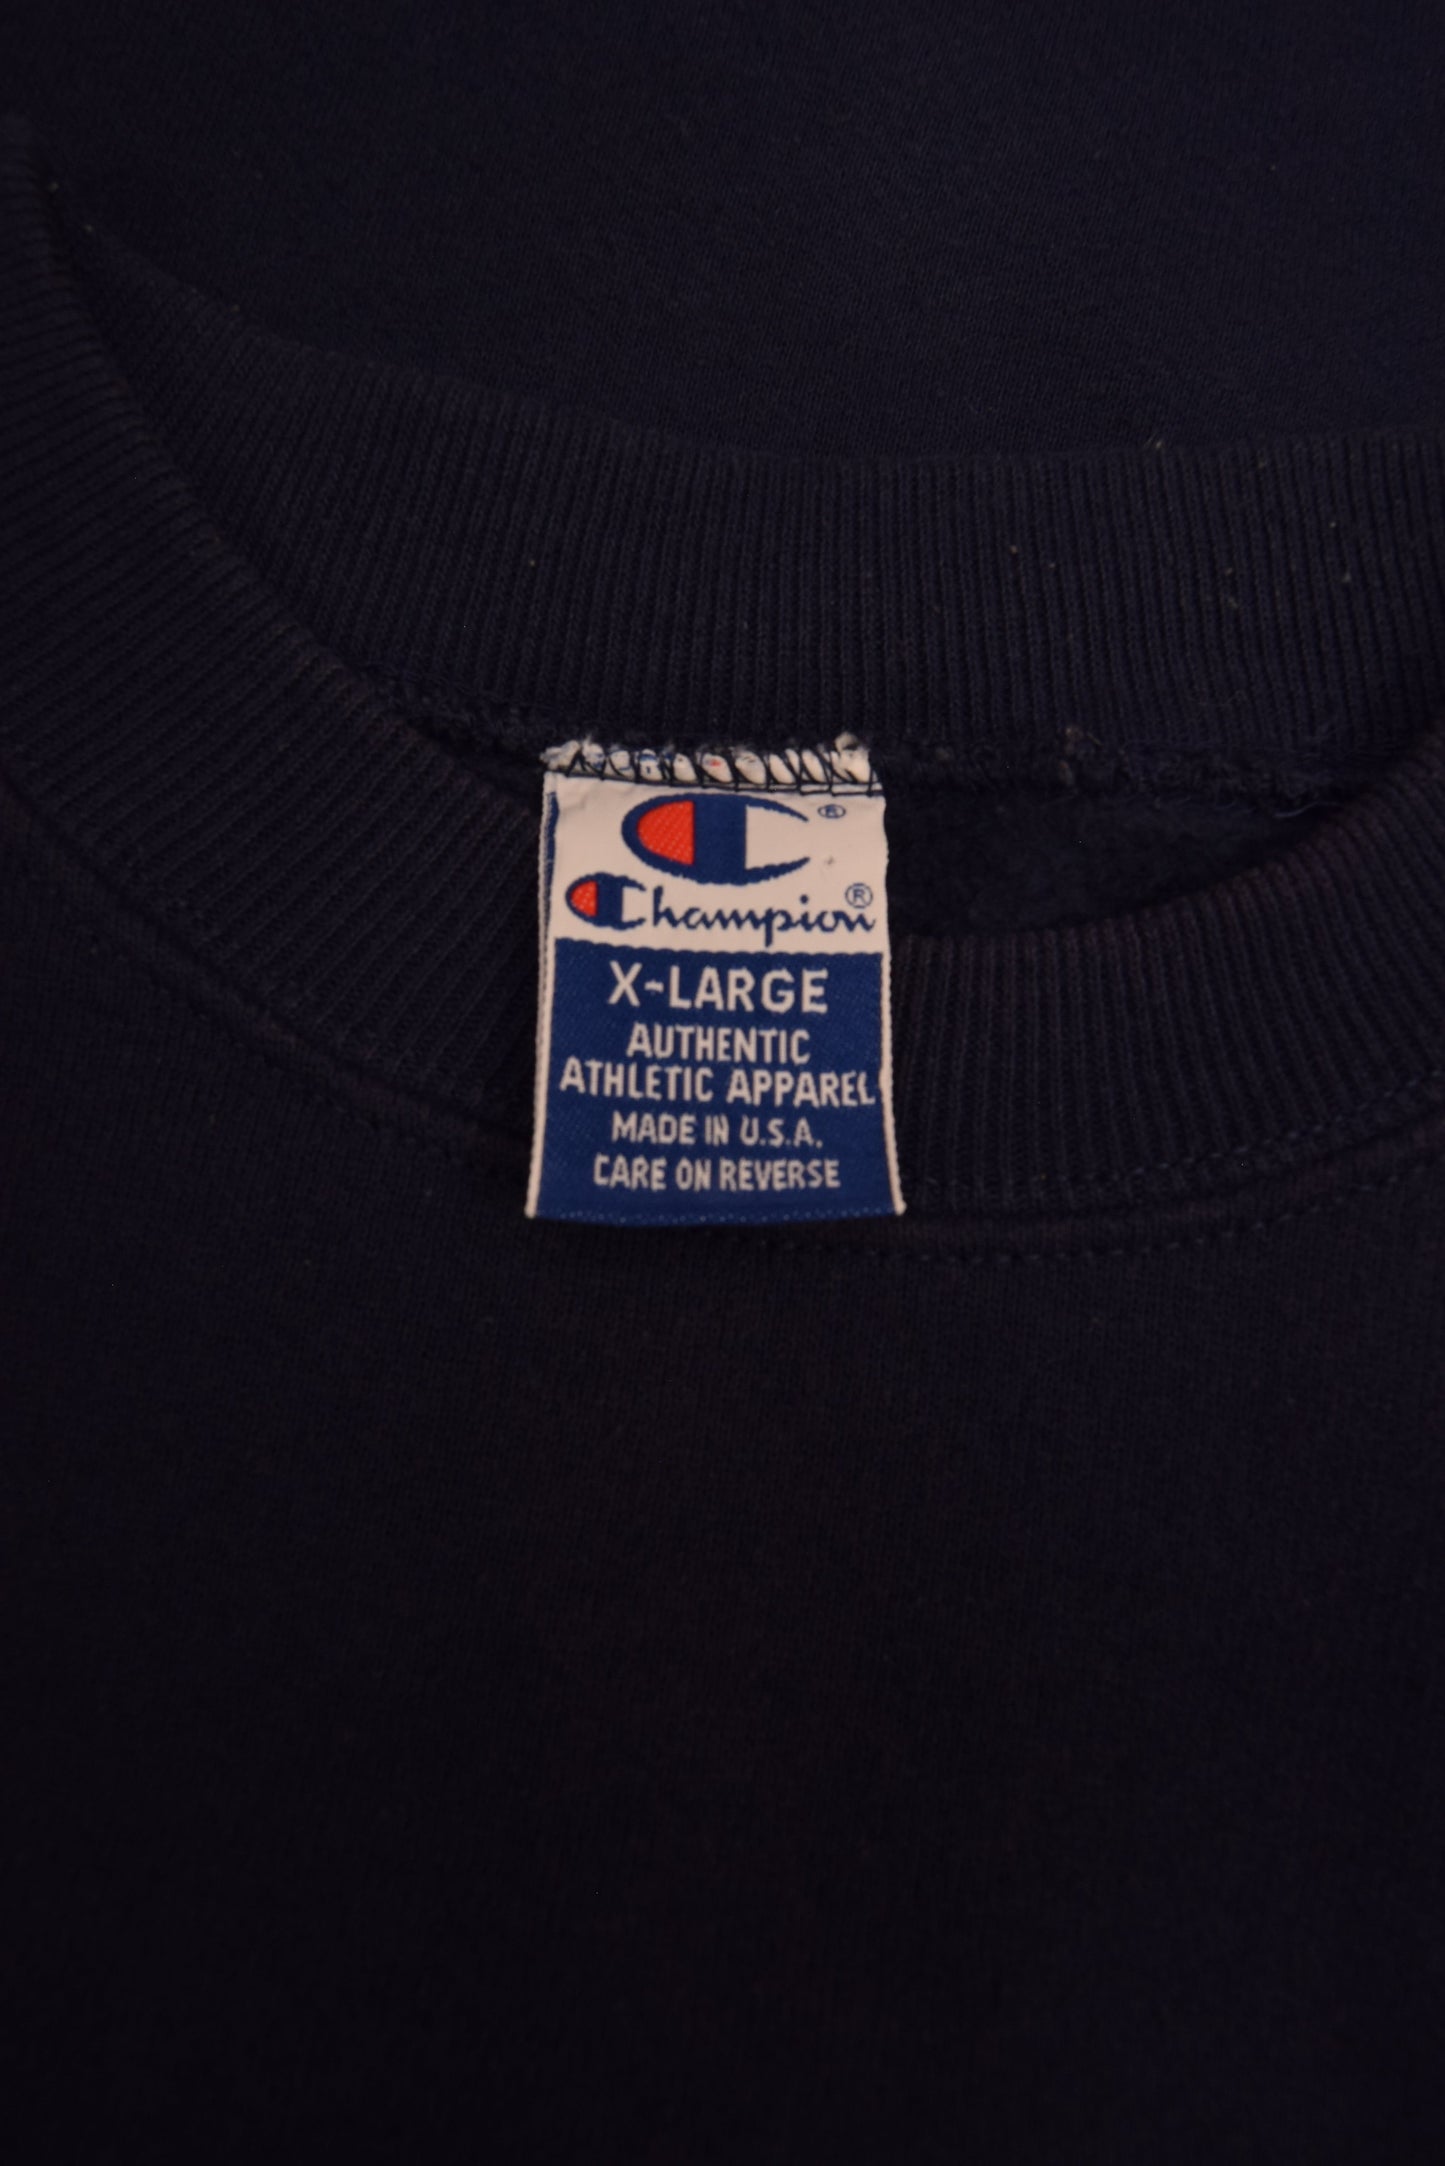 Vintage Champion Atlanta 1996 Centennial Olympic Games Sweatshirt Crewneck Size XL Navy Blue Made in USA